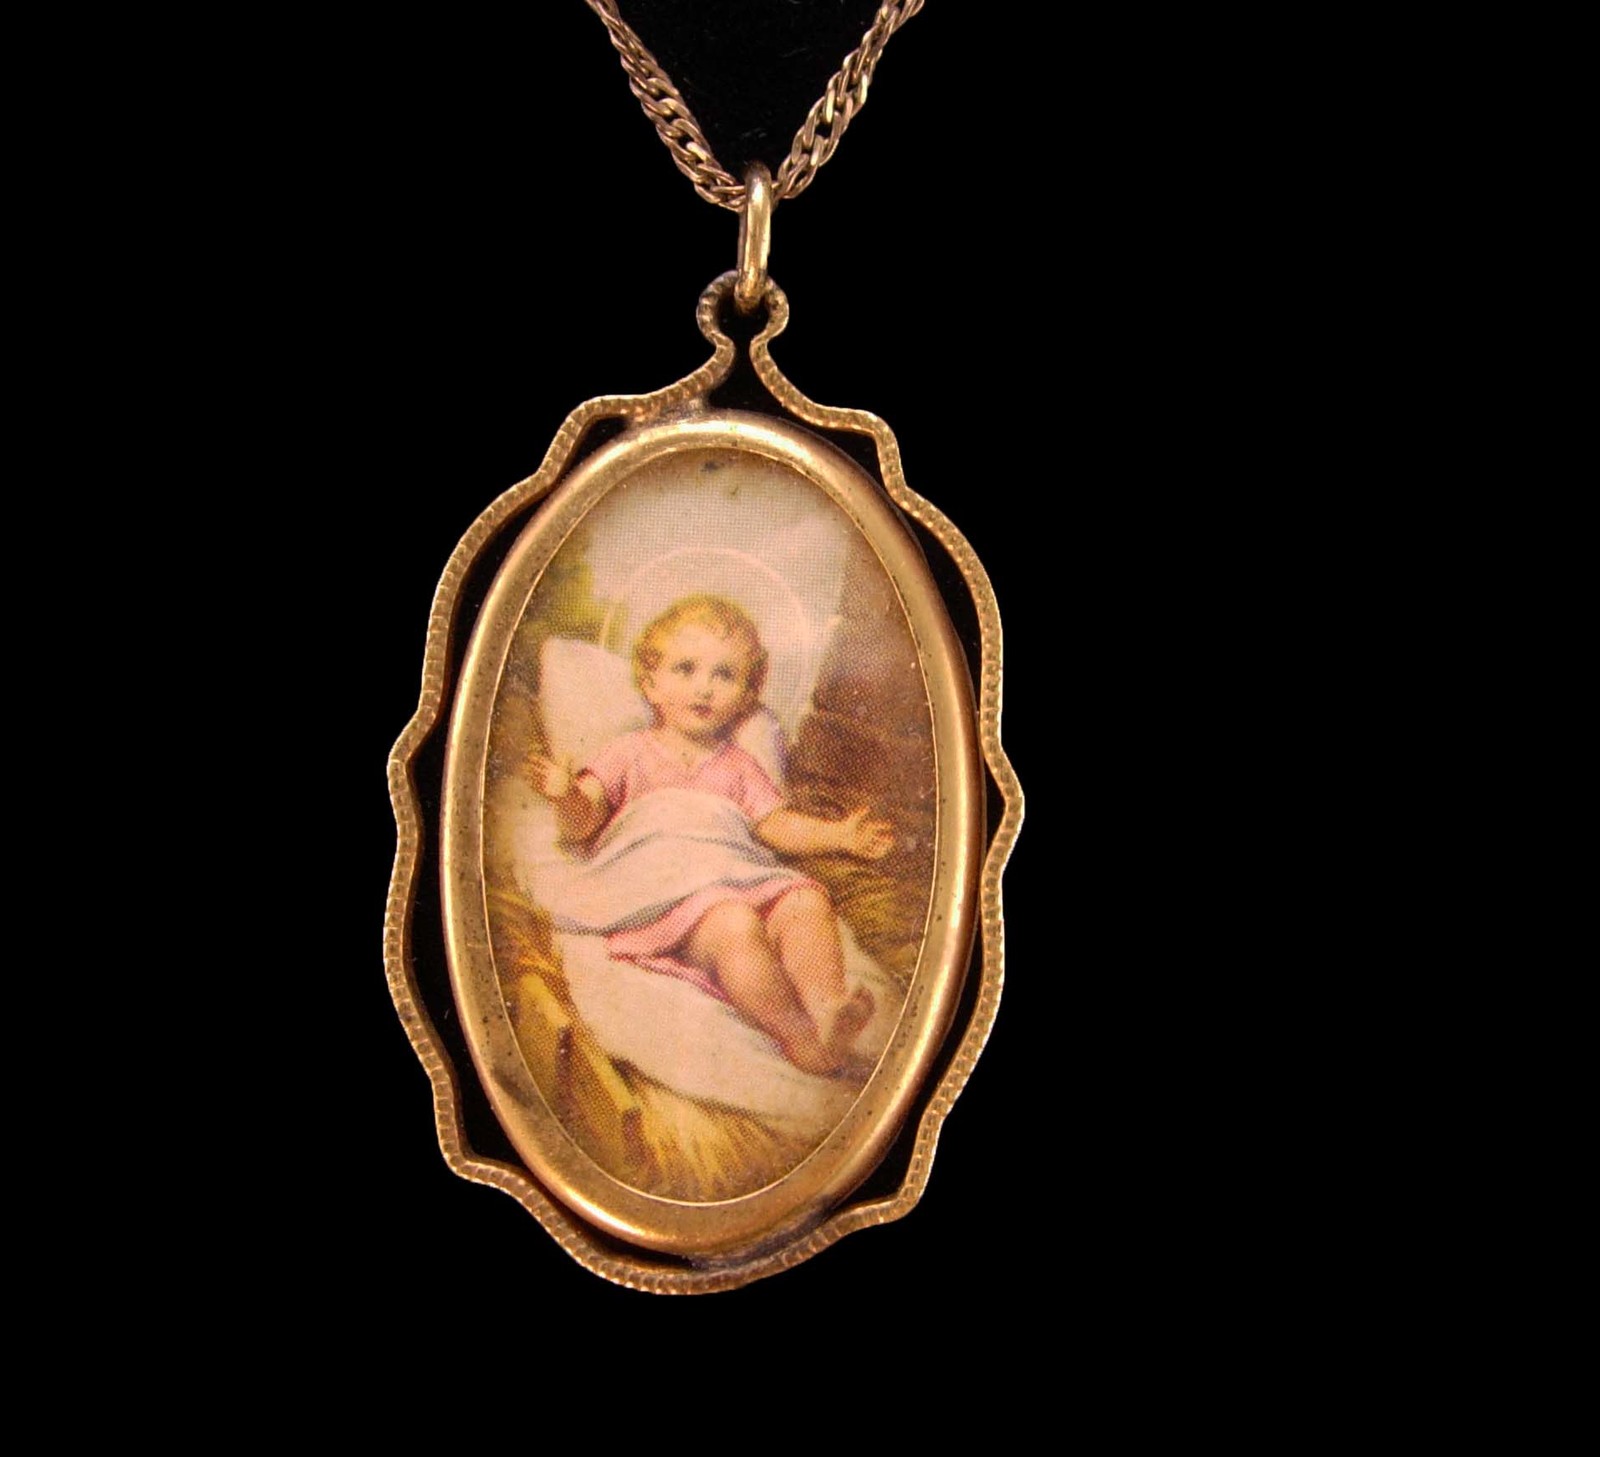 1920's Religious portrait necklace - Jesus under glass - 14k rose gold filled    - $185.00